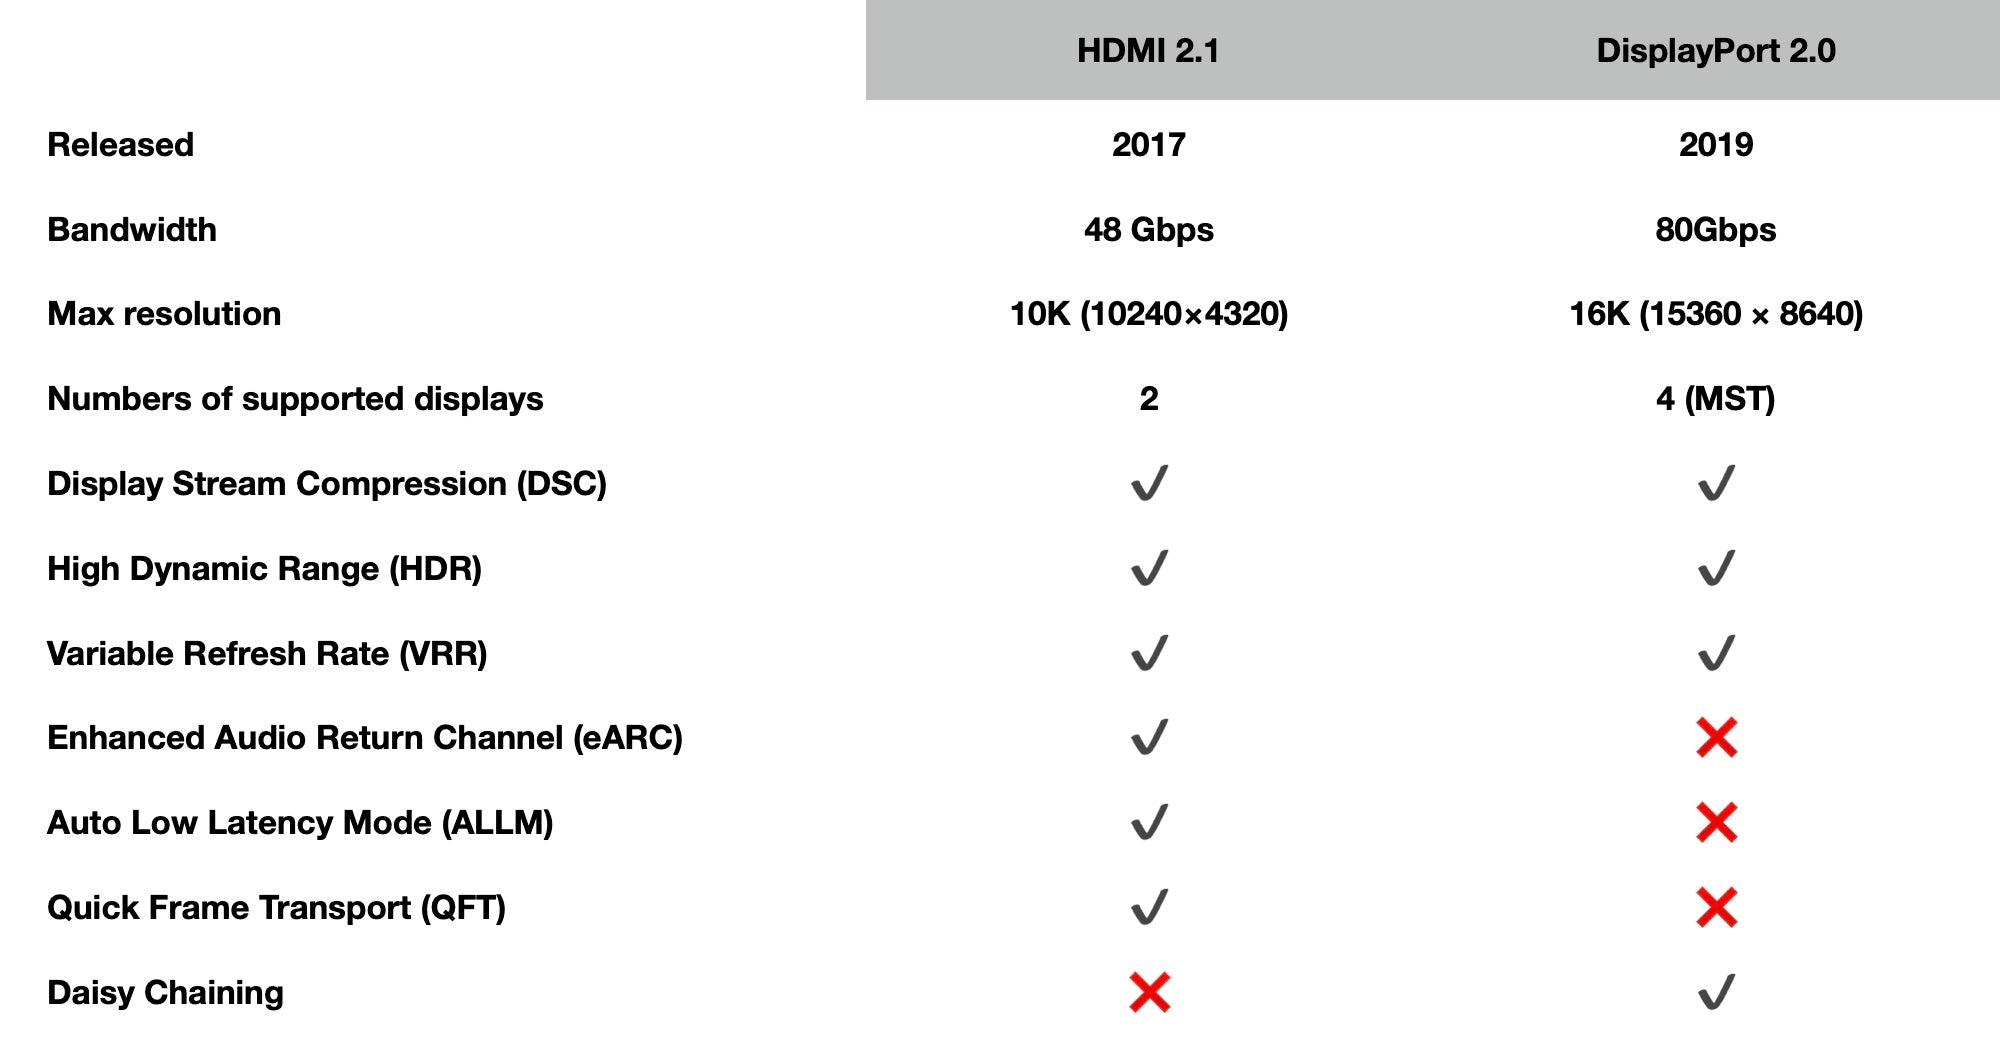 fusionere bid mundstykke Which Is Better: DisplayPort or HDMI? – iVANKY